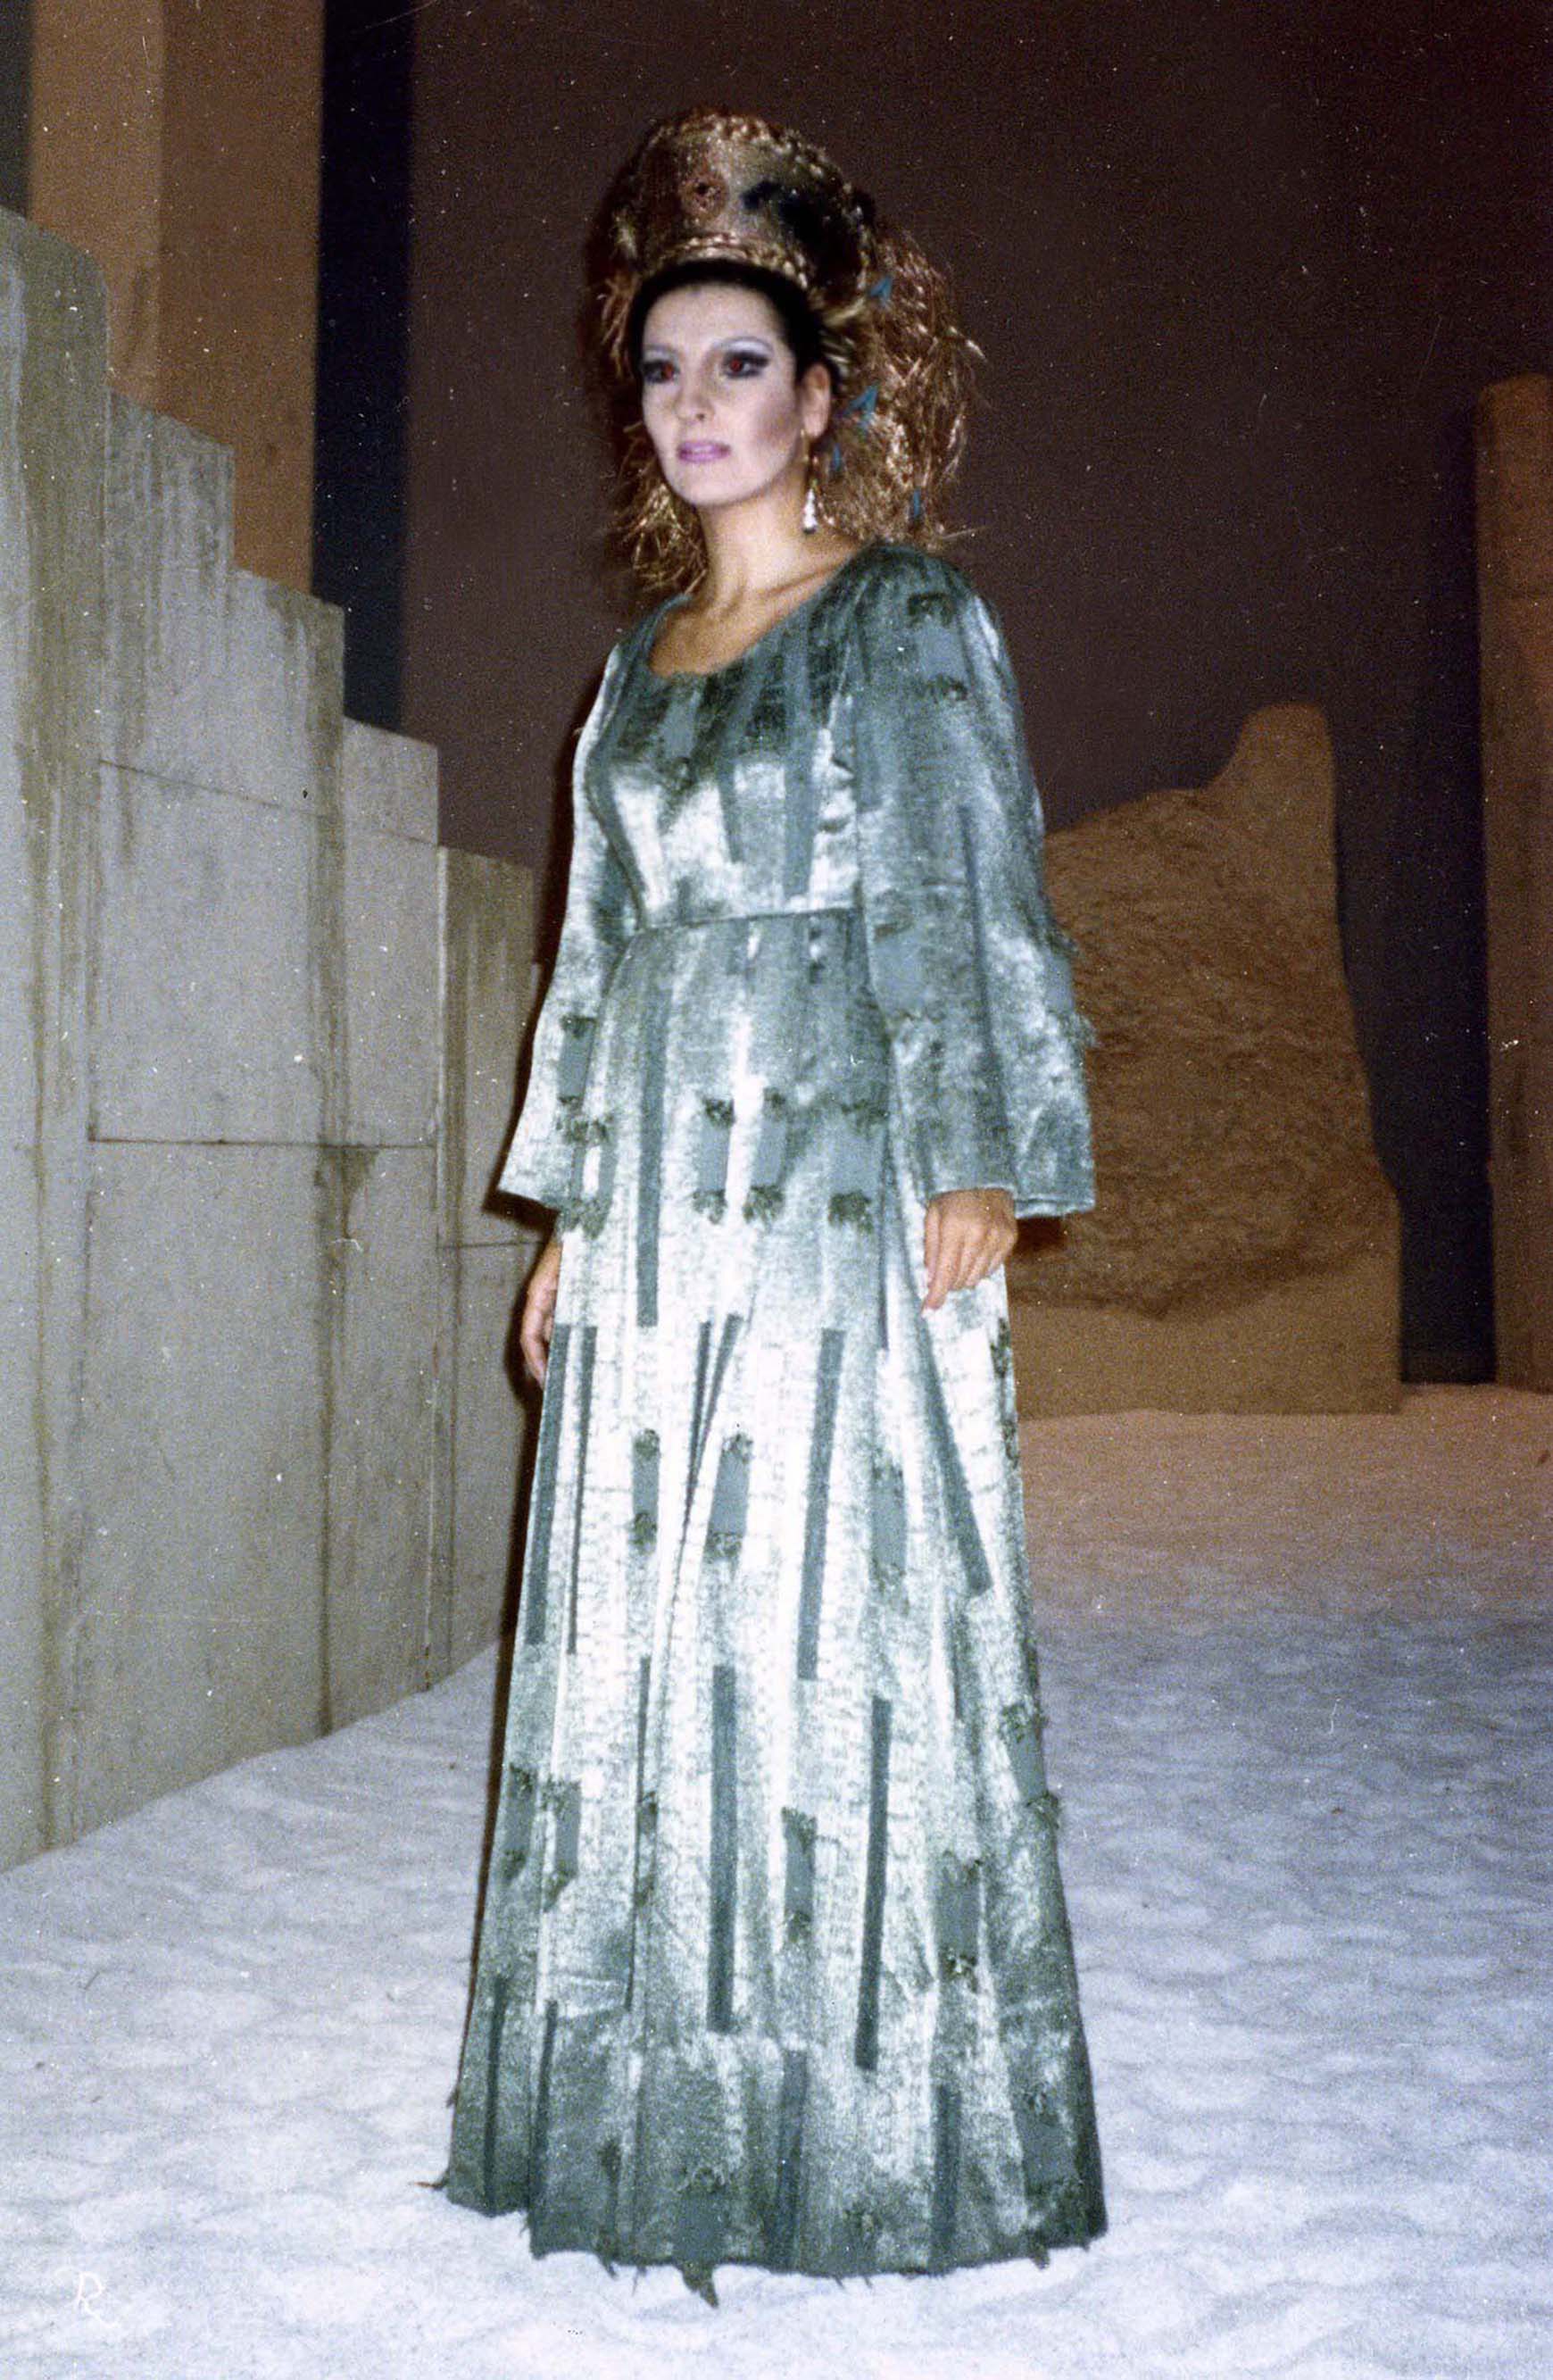 Lucia Aliberti⚘Théatre du Capitole⚘Toulouse⚘Opera⚘"Semiramide"⚘On Stage⚘:http://www.luciaaliberti.it #luciaaliberti #theatreducapitole #toulouse #semiramide #opera #onstage